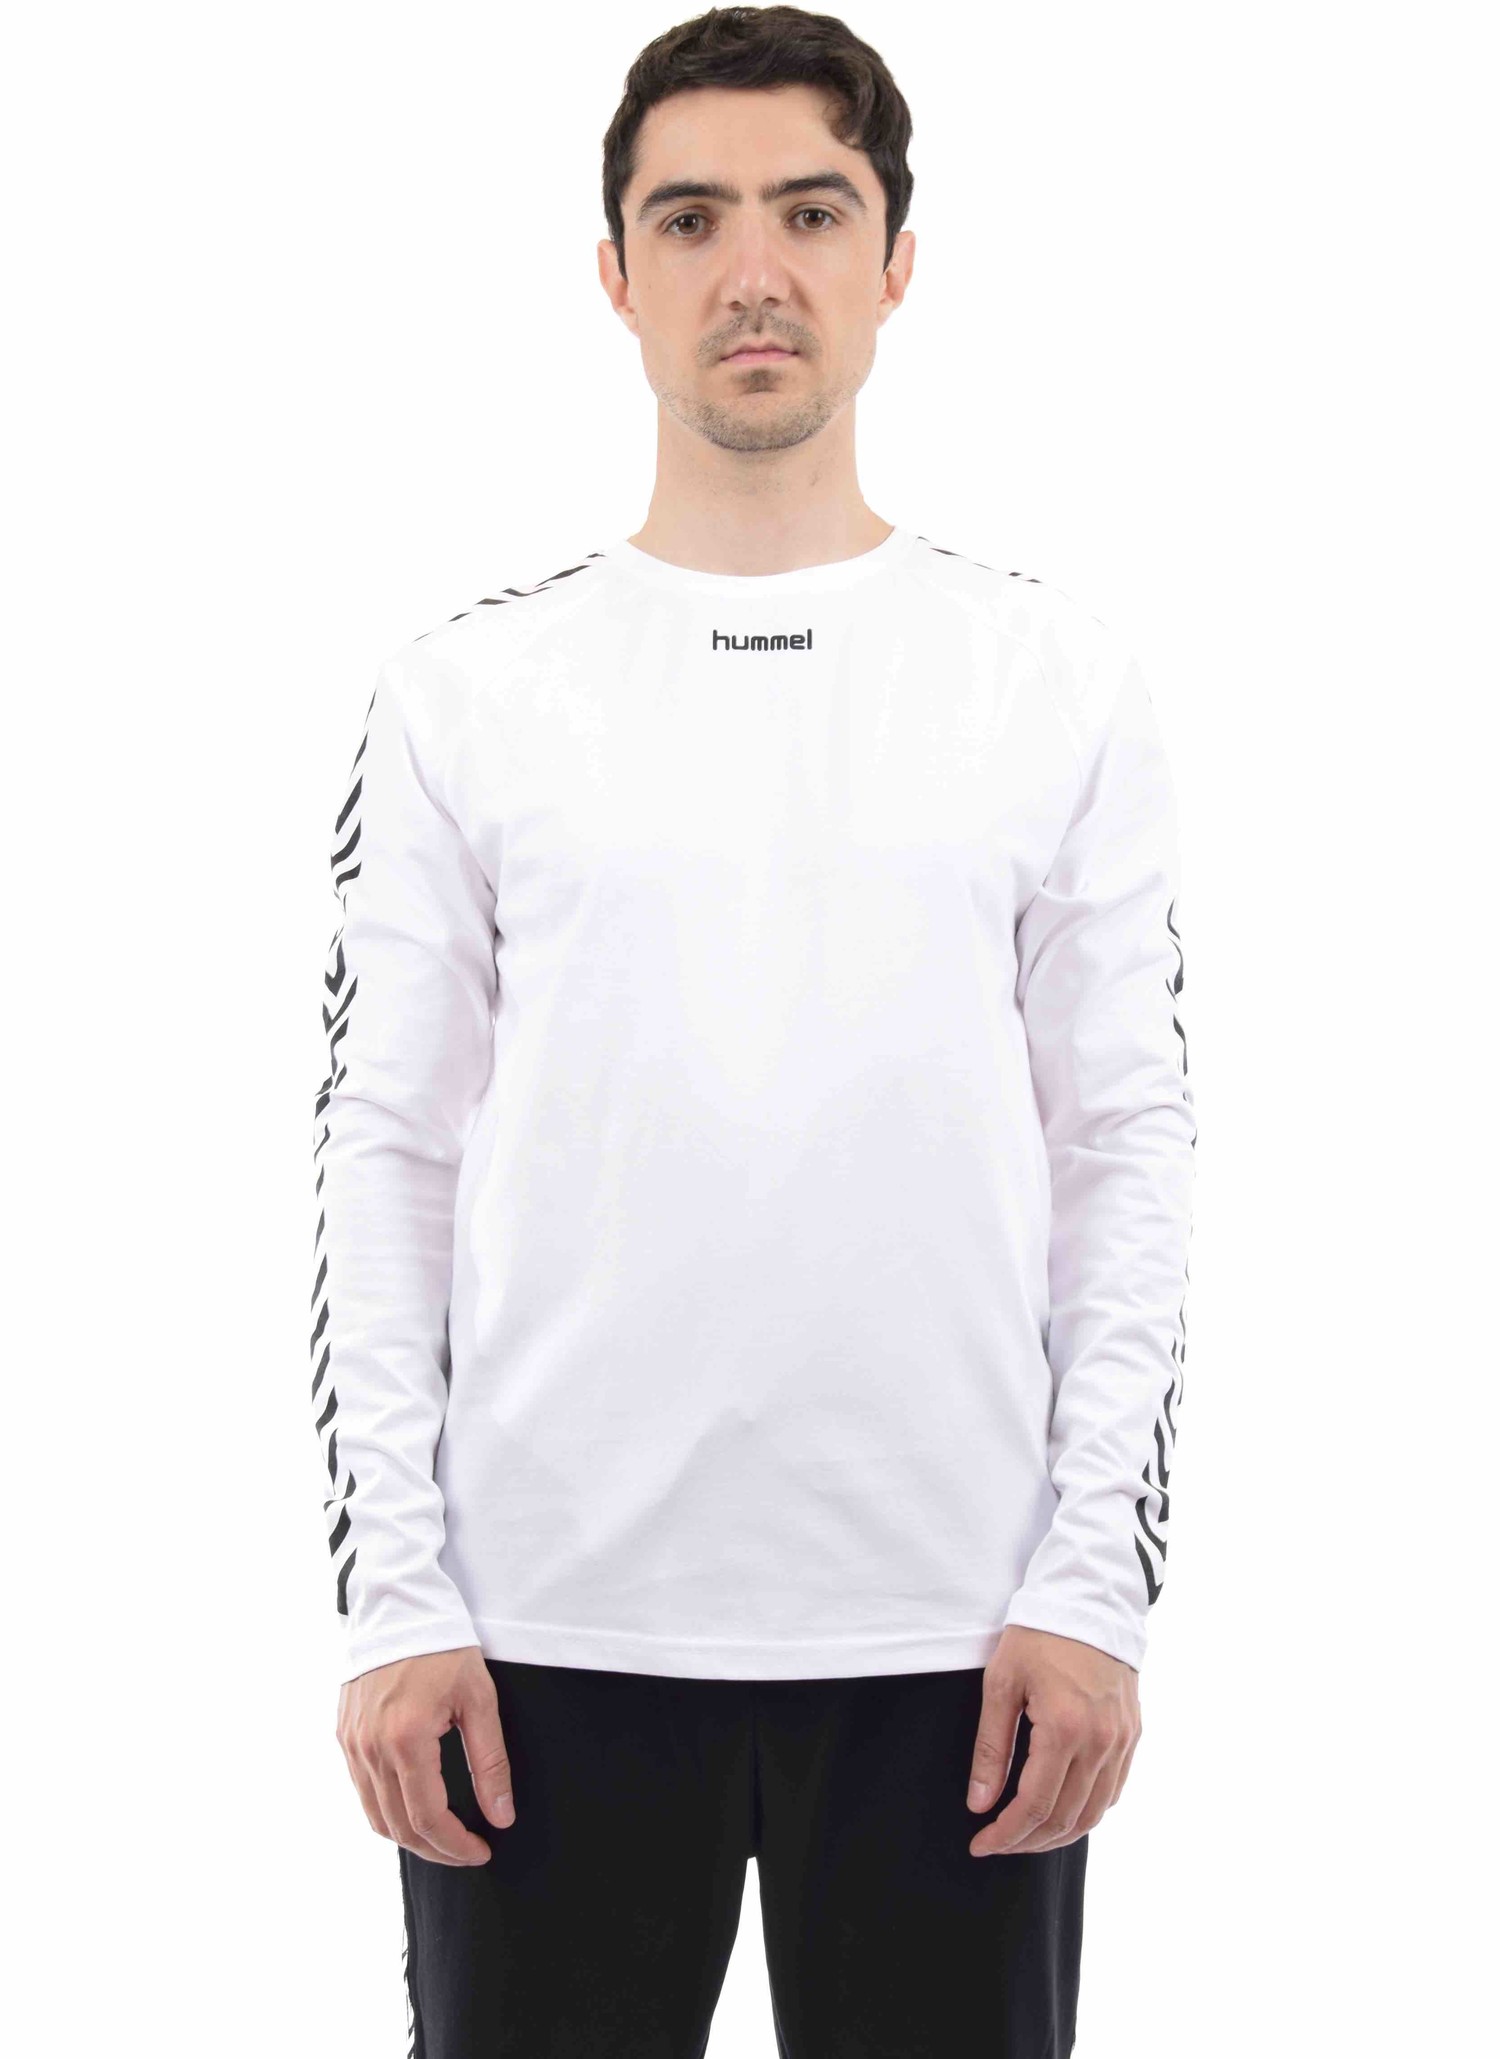 | Sleeve Hummel Long T-Shirt HALO Hive - Agge HALO White